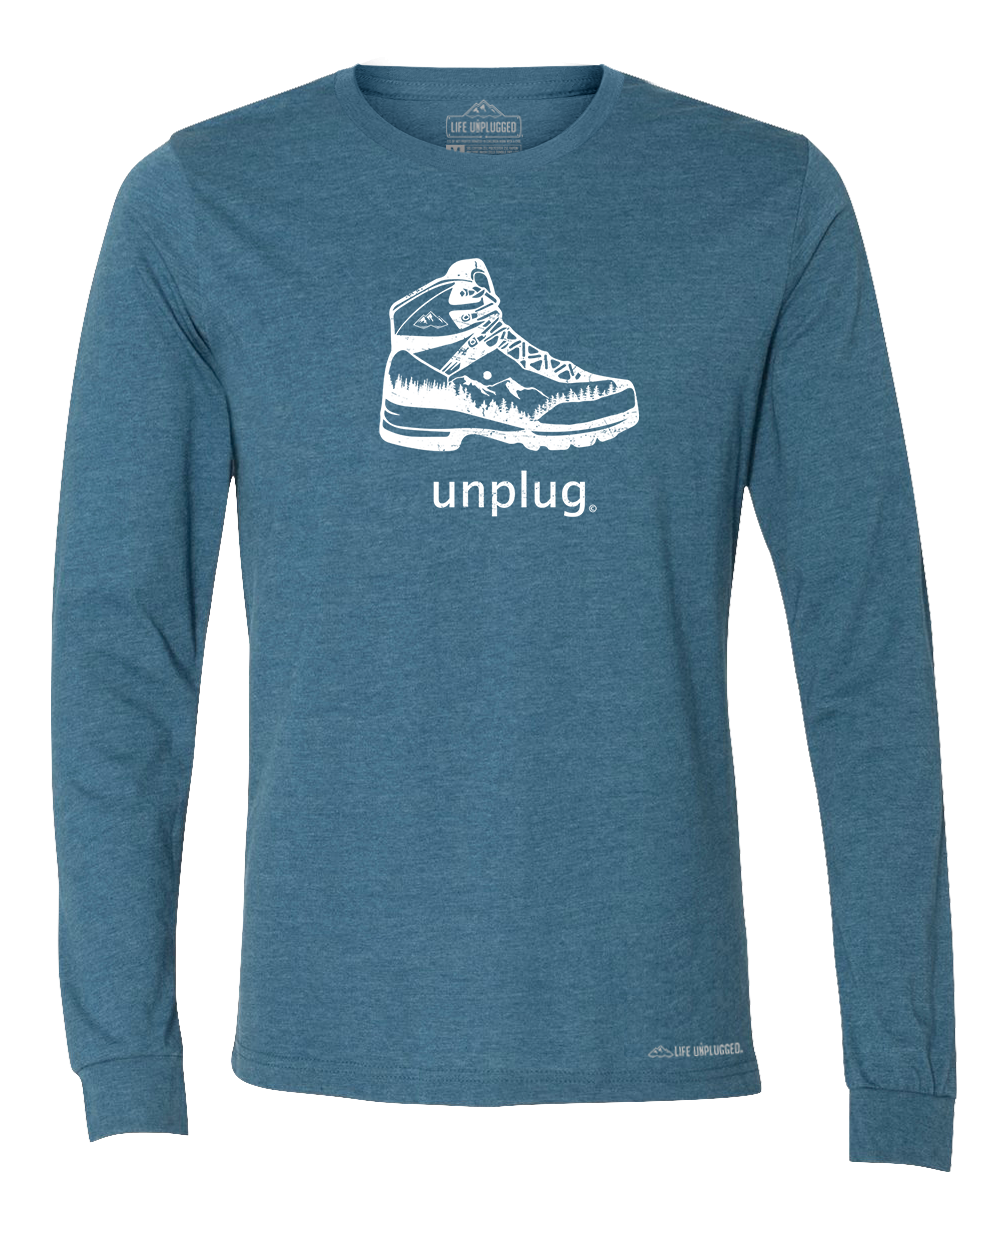 Hiking Boot Mountain Scene Premium Polyblend Long Sleeve T-Shirt - Life Unplugged